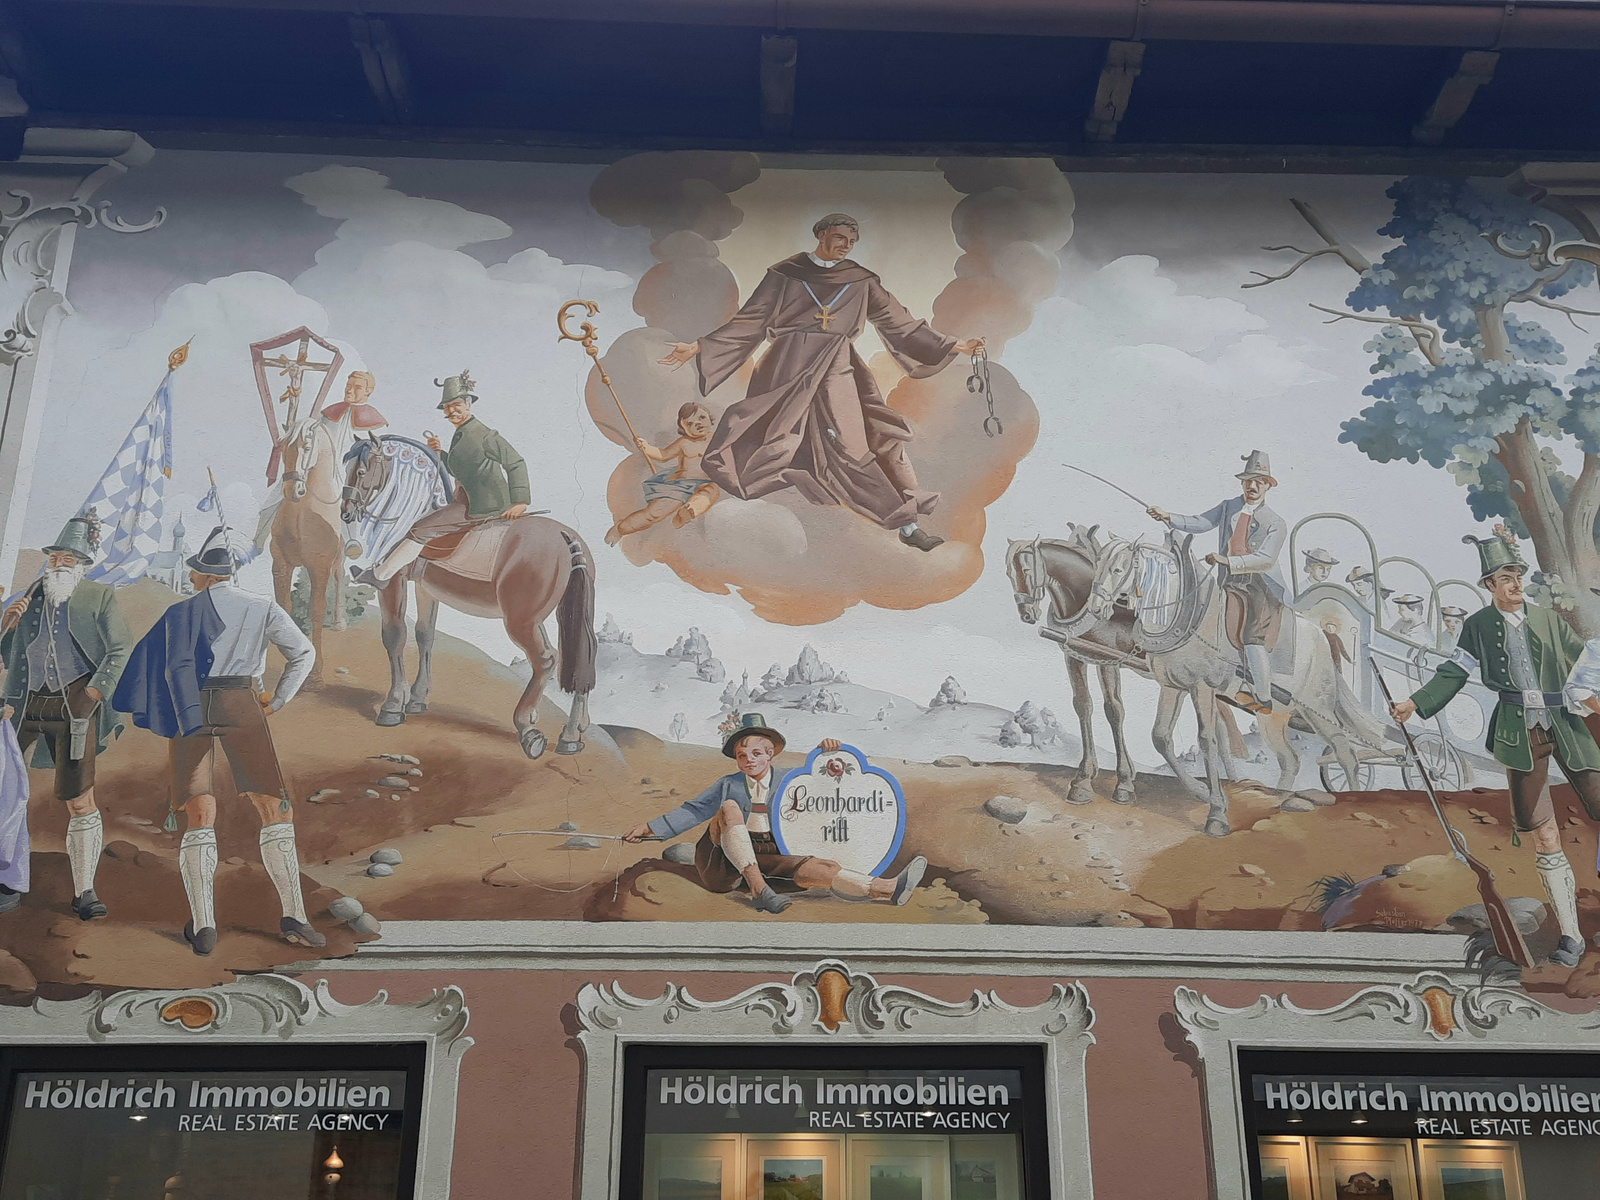 Európai "díznilend" Oberammergau